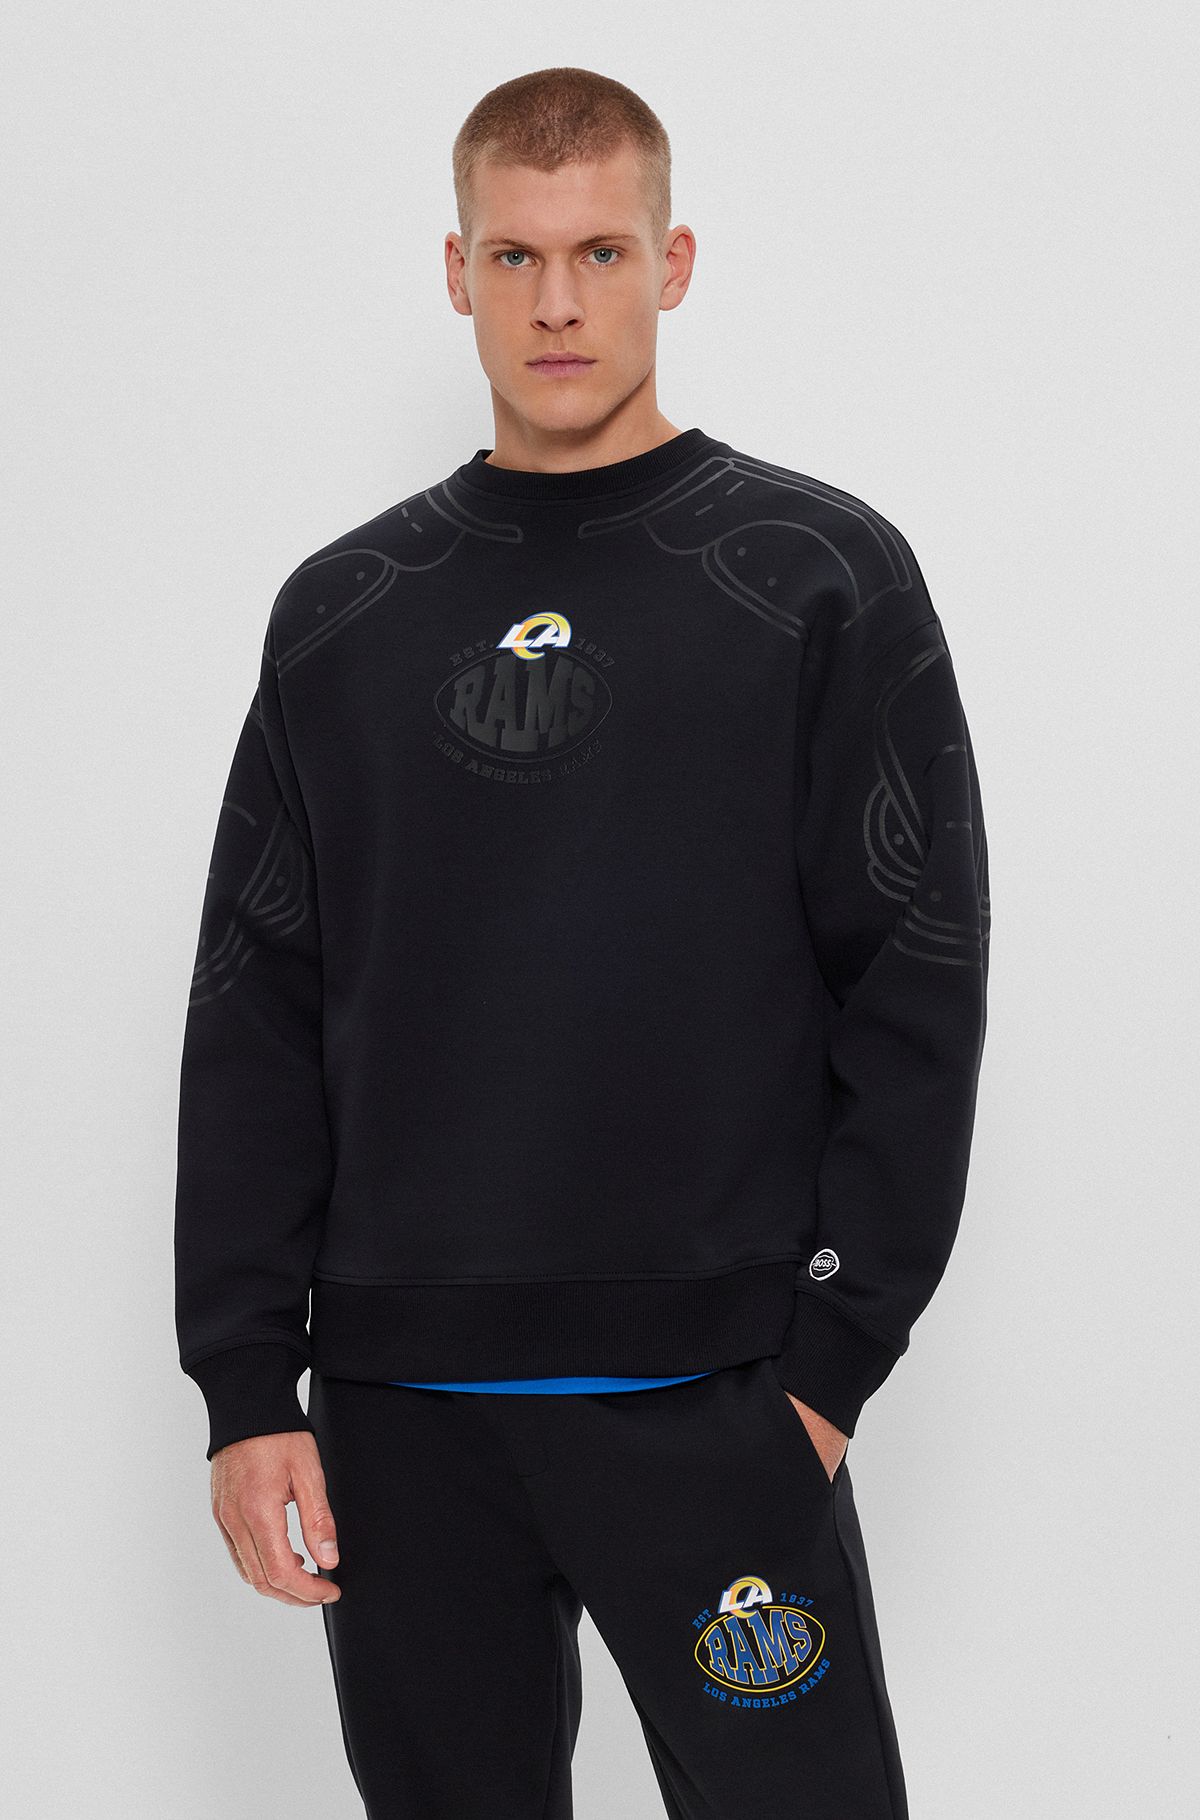 BOSS x NFL cotton-blend sweatshirt with collaborative branding, Rams